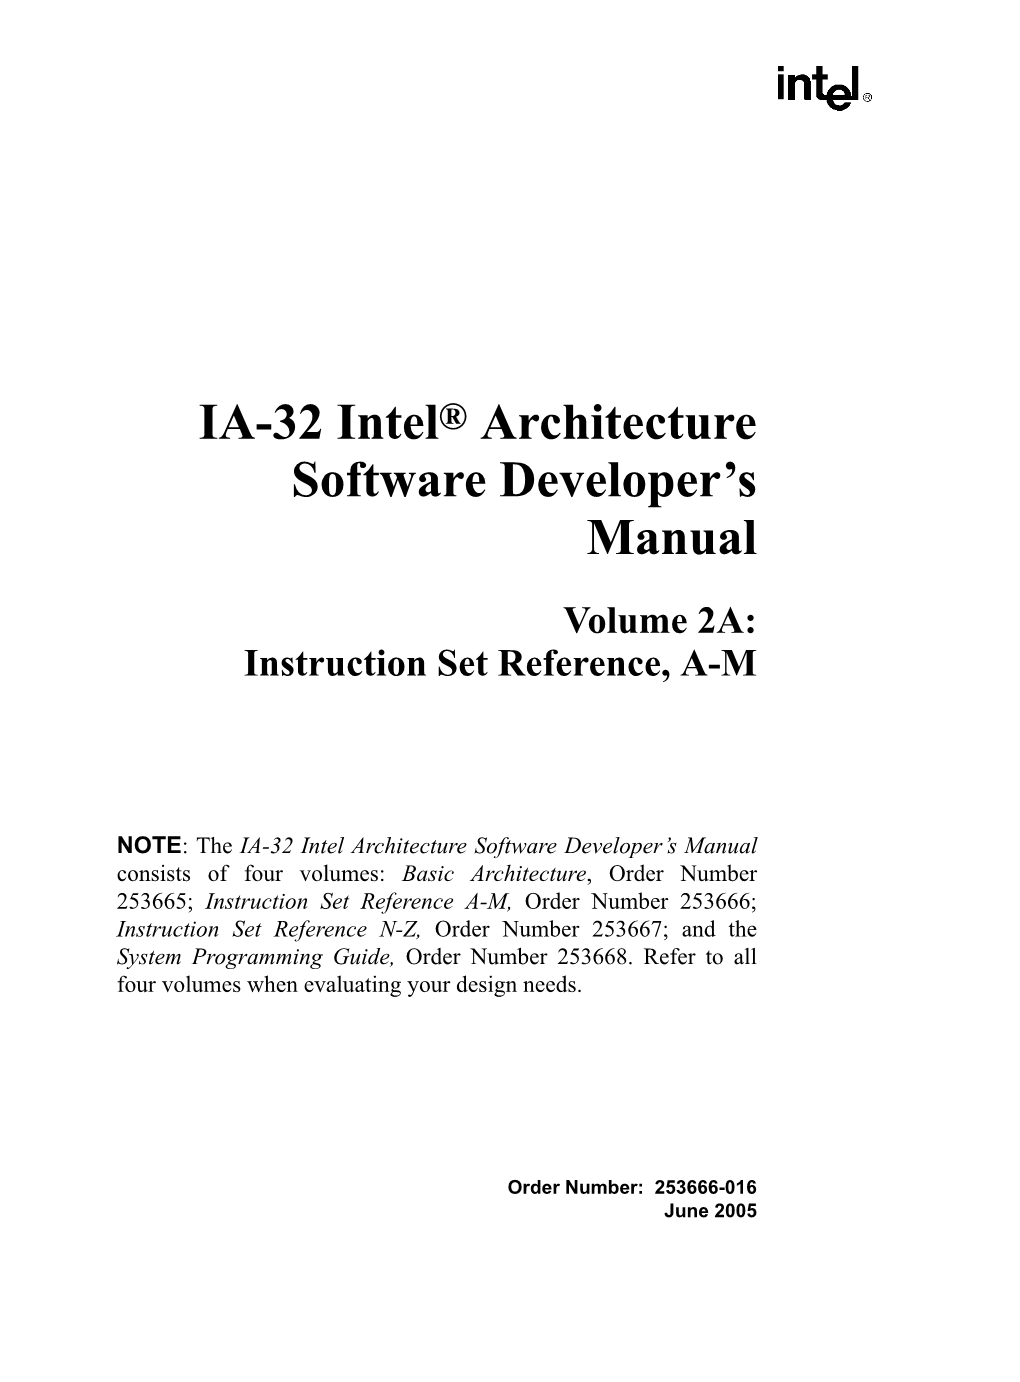 IA-32 Intel® Architecture Software Developer's Manual, Volume 2A